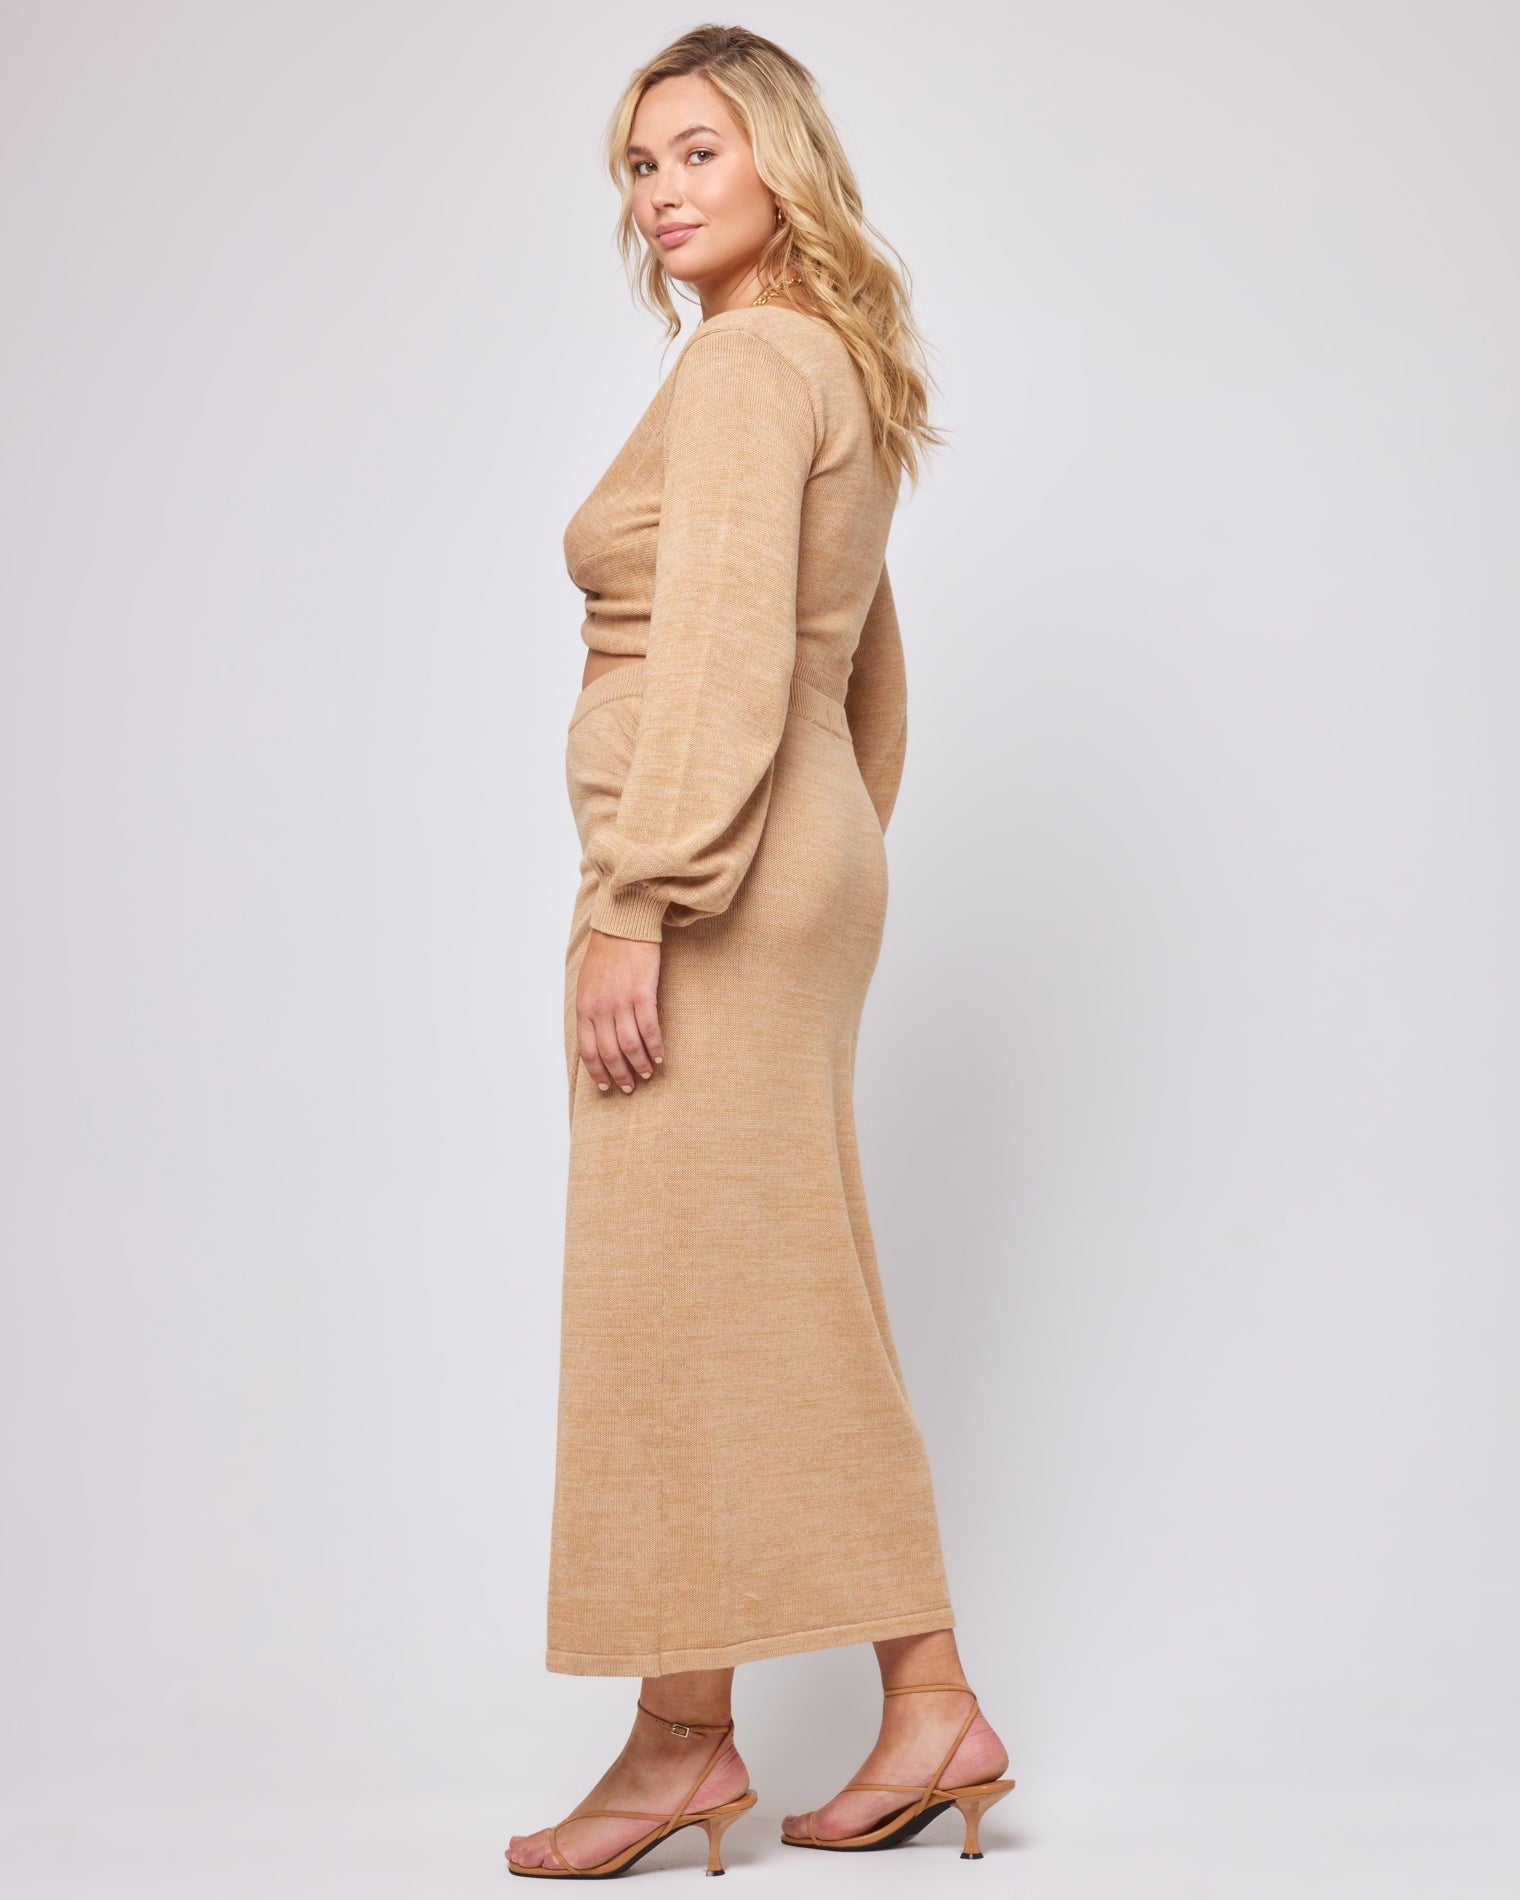 Siren Skirt Camel | Model: Sydney (size: XL)